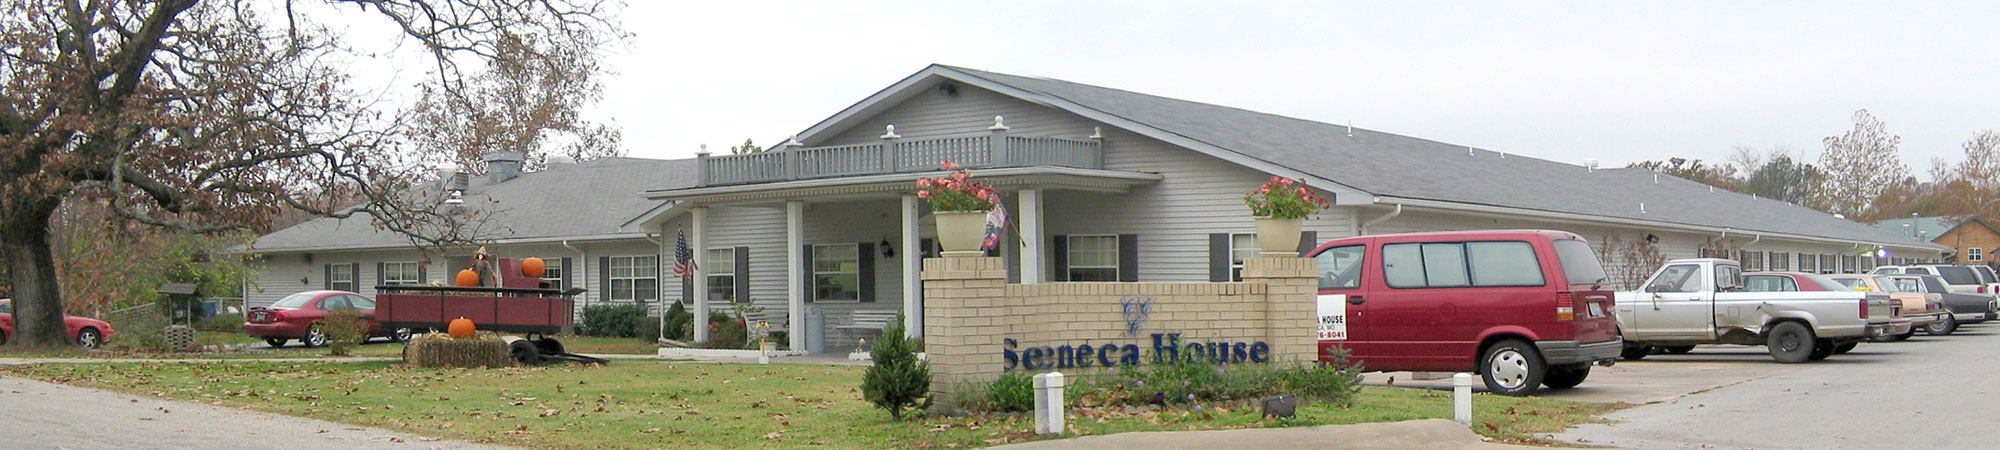 Seneca House Location